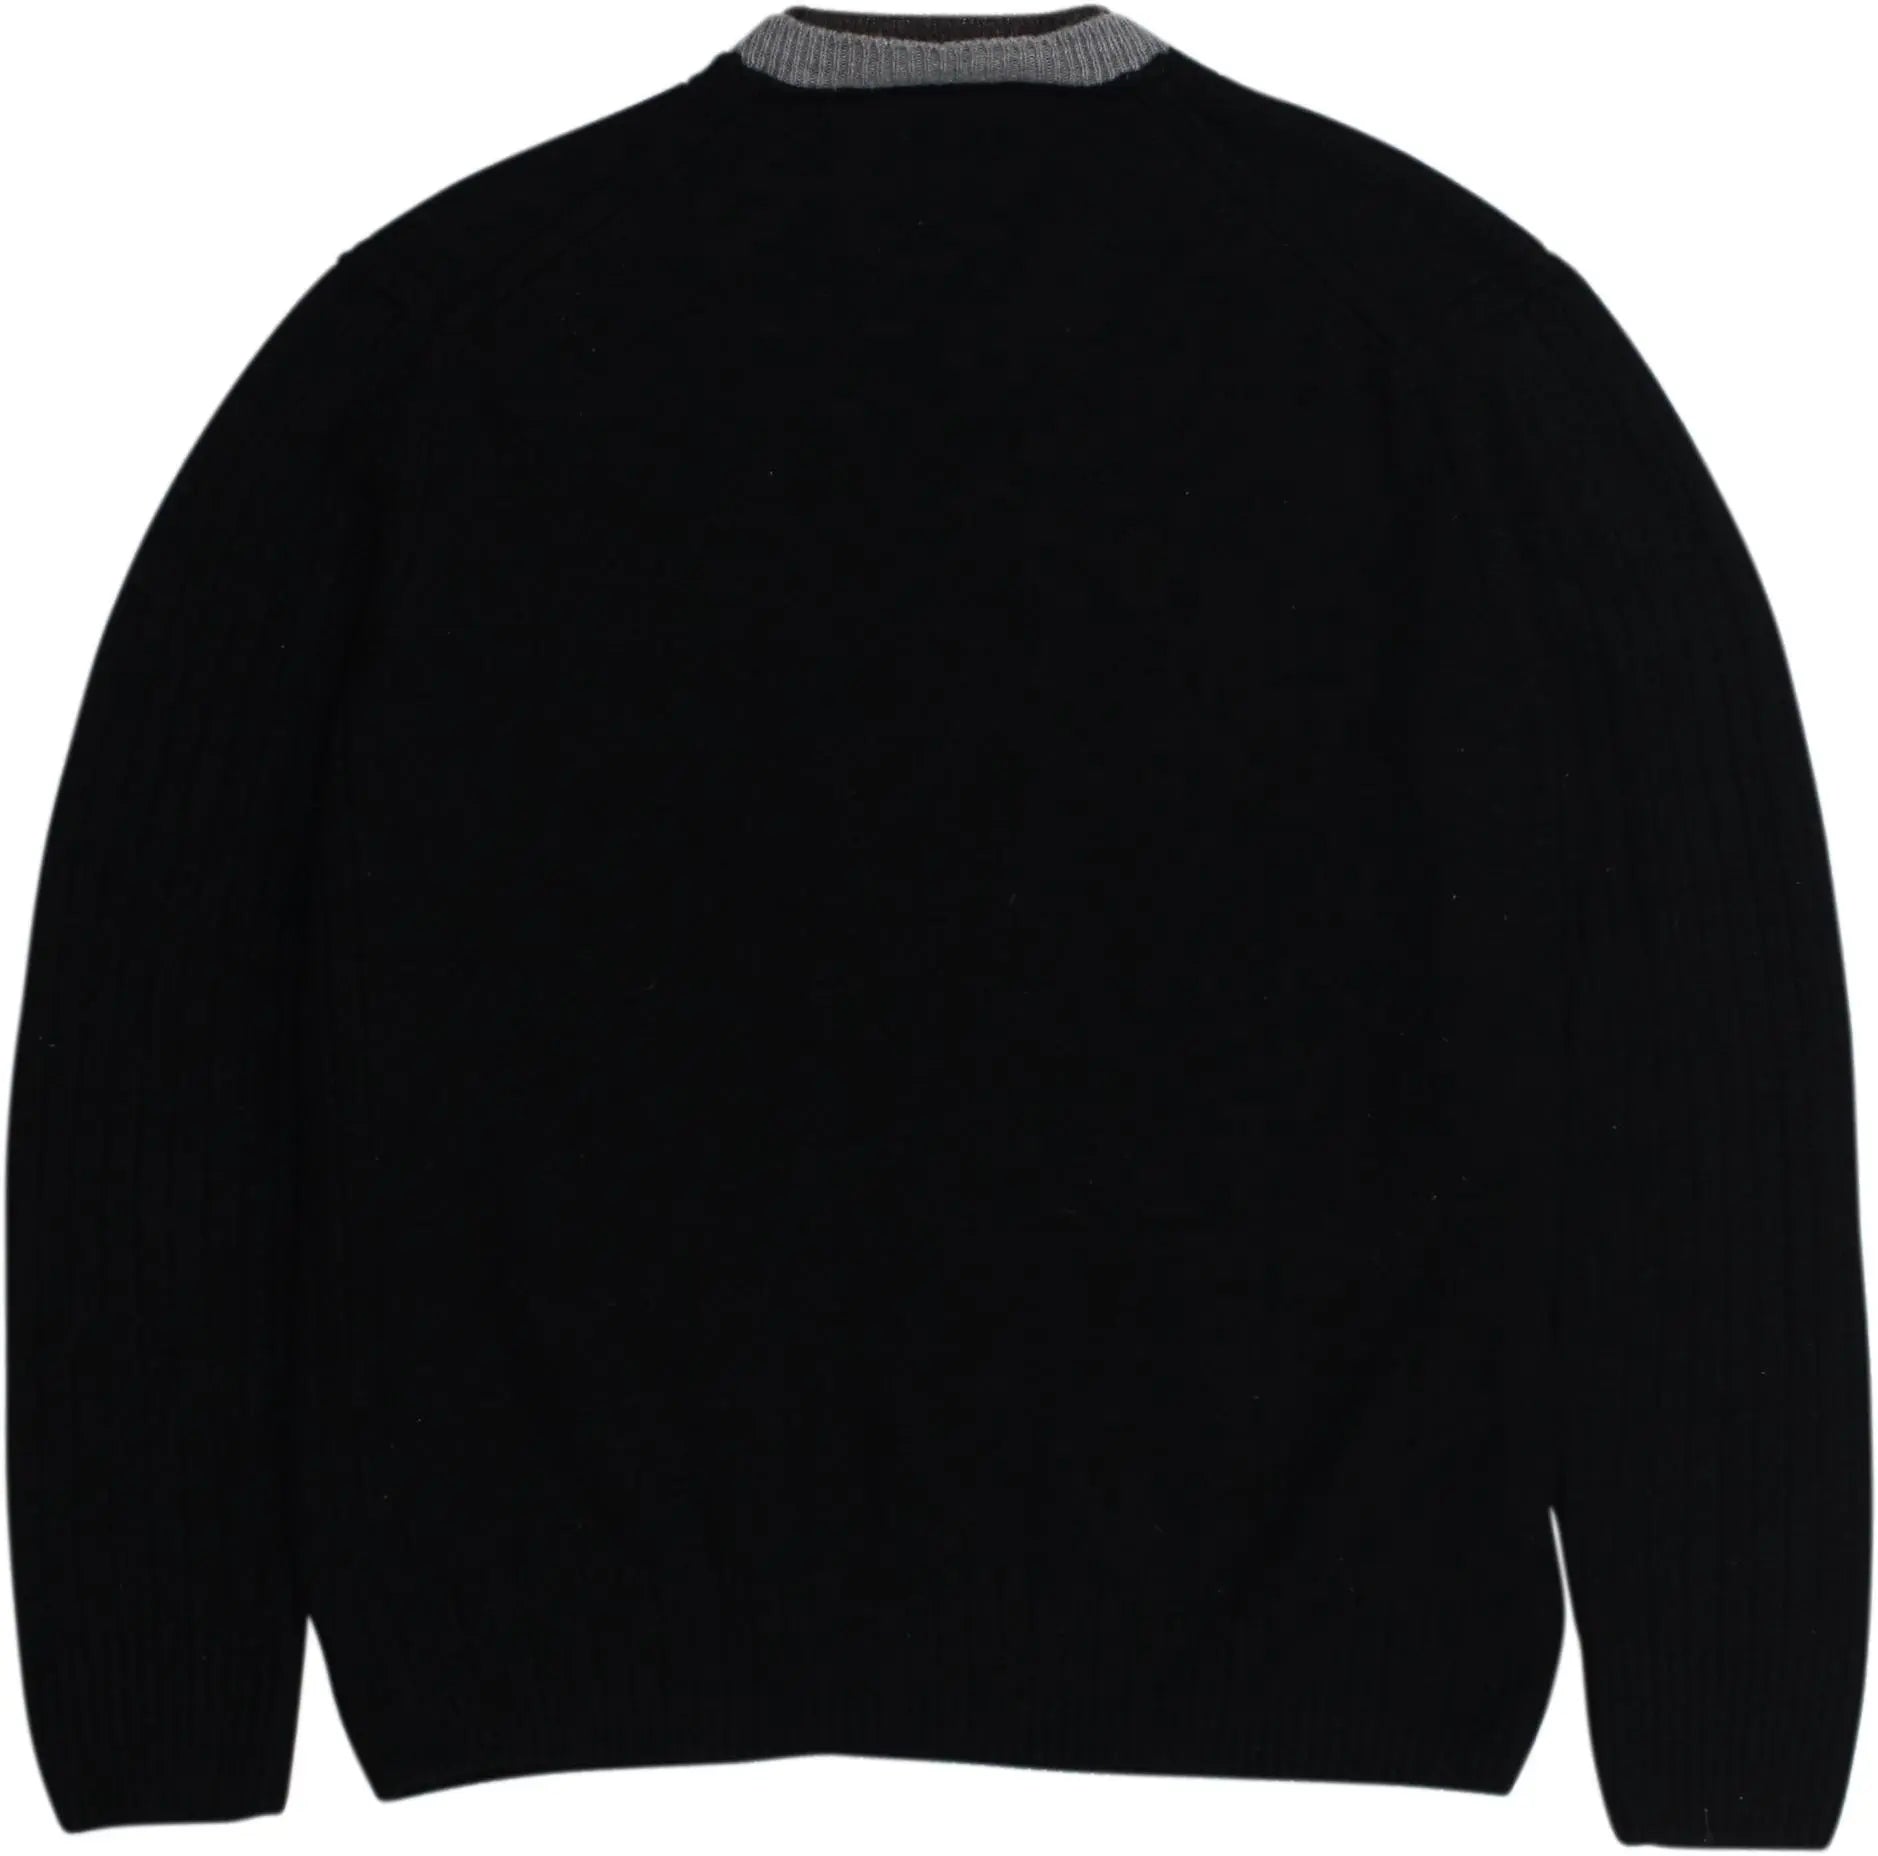 Lotto - Black Wool Blend V-Neck Jumper- ThriftTale.com - Vintage and second handclothing